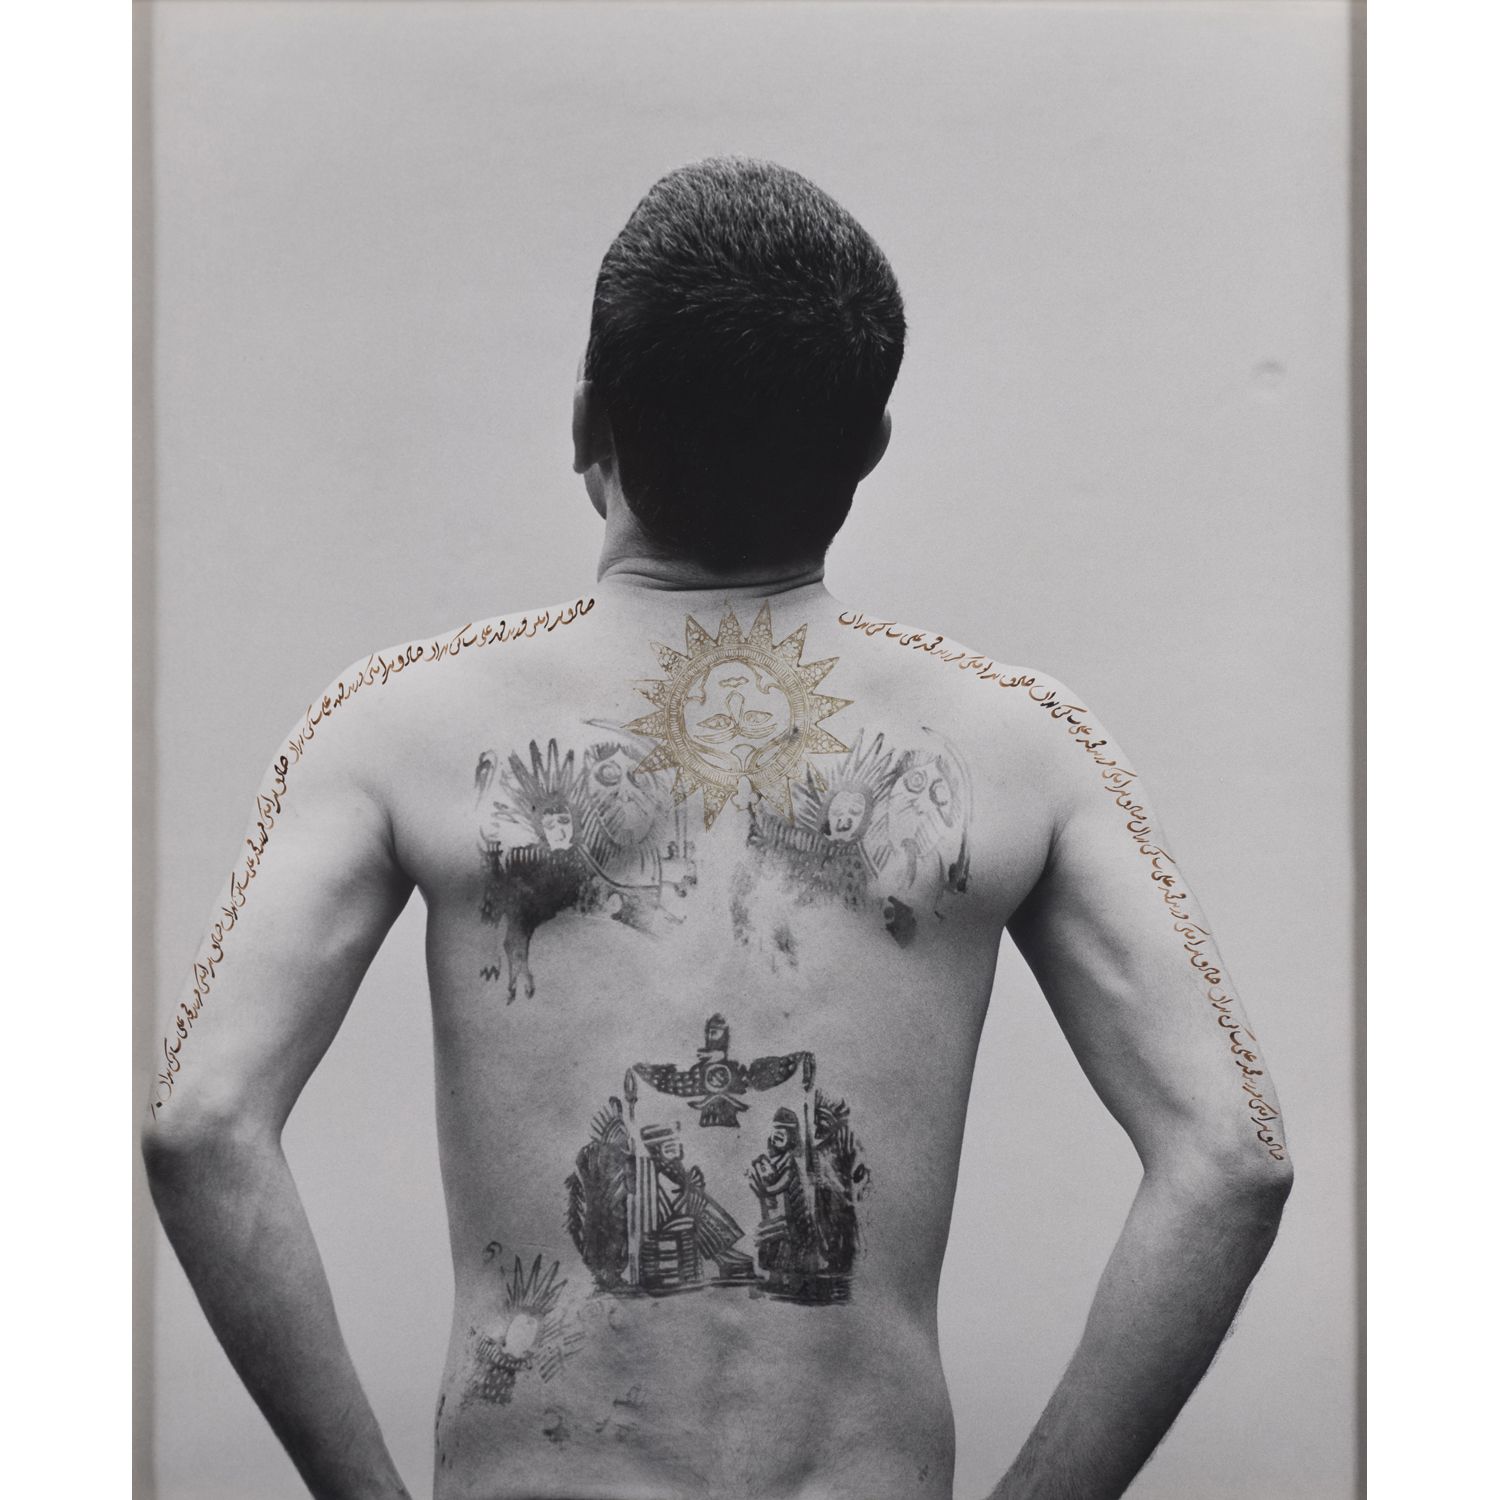 Null 萨德格-提拉夫坎（1965-2013年

身体曲线和铭文, 2002

用墨水加强的银色印刷品

独特的作品

59 x 48.5厘米

出处：巴黎V&hellip;